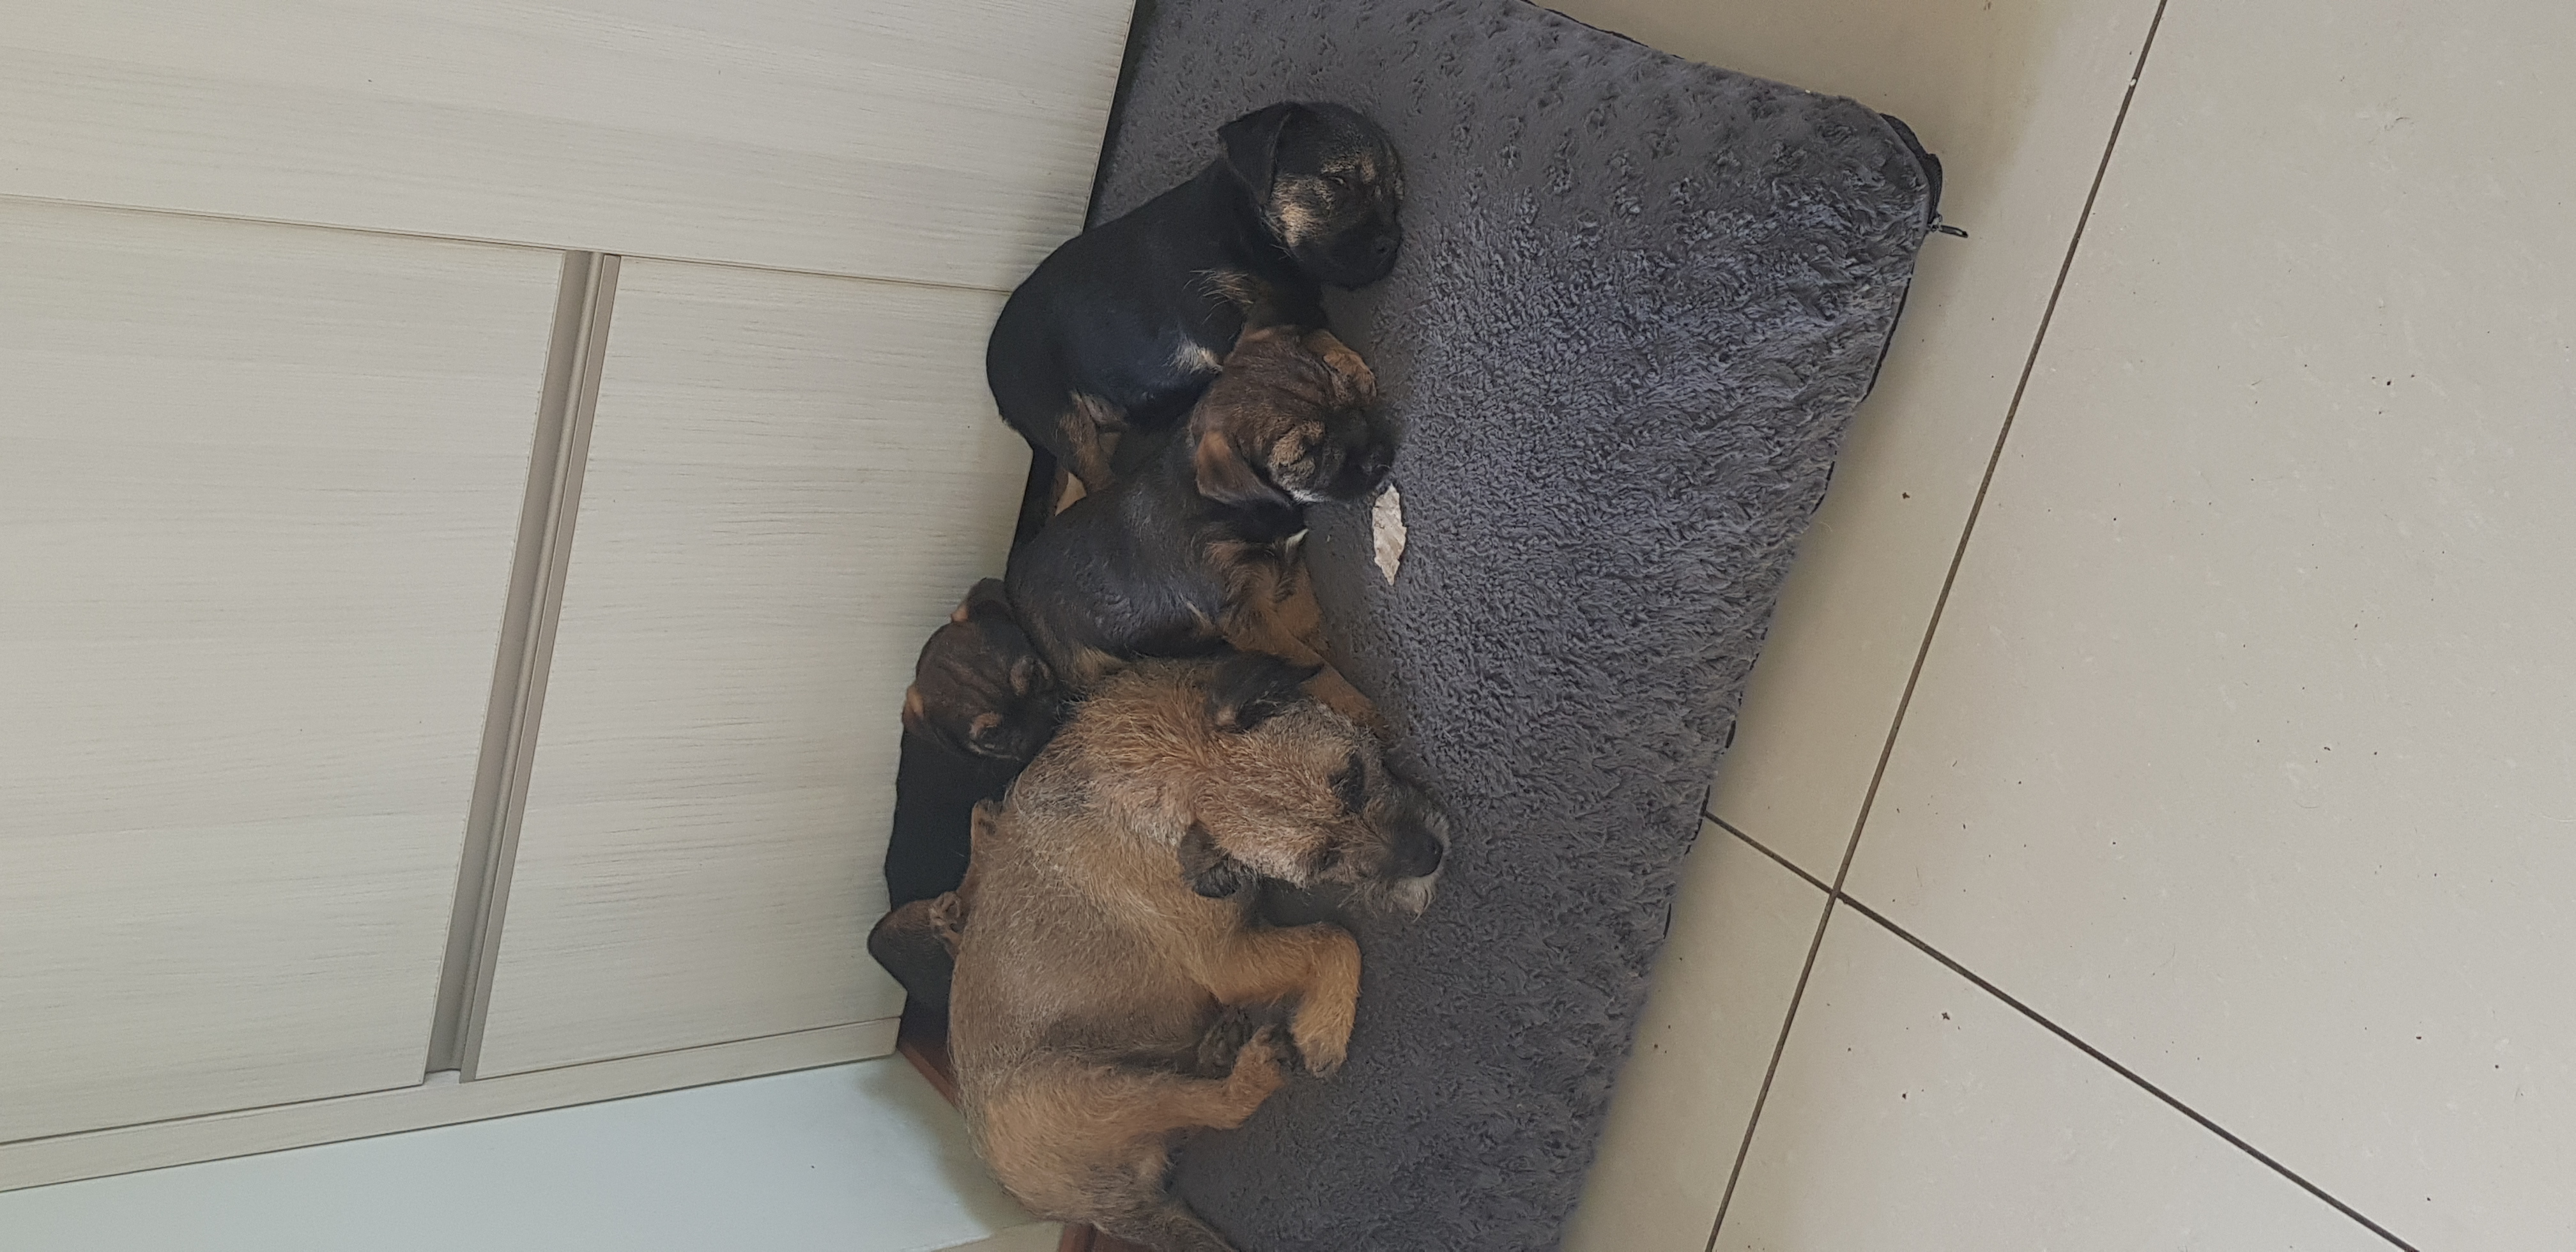 mum and puppies